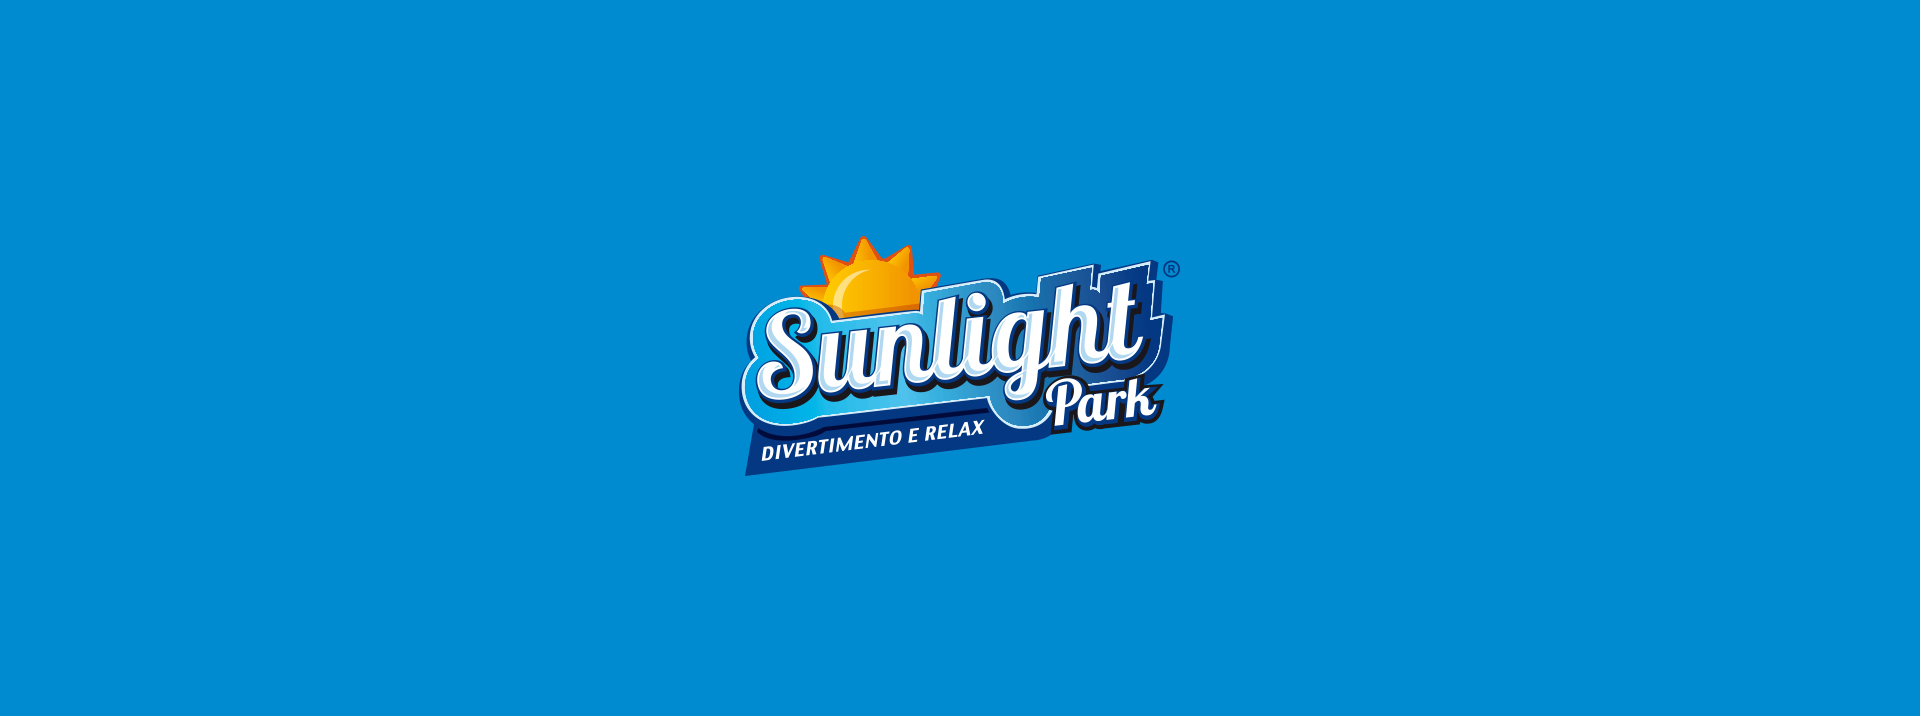 Sunlight Park